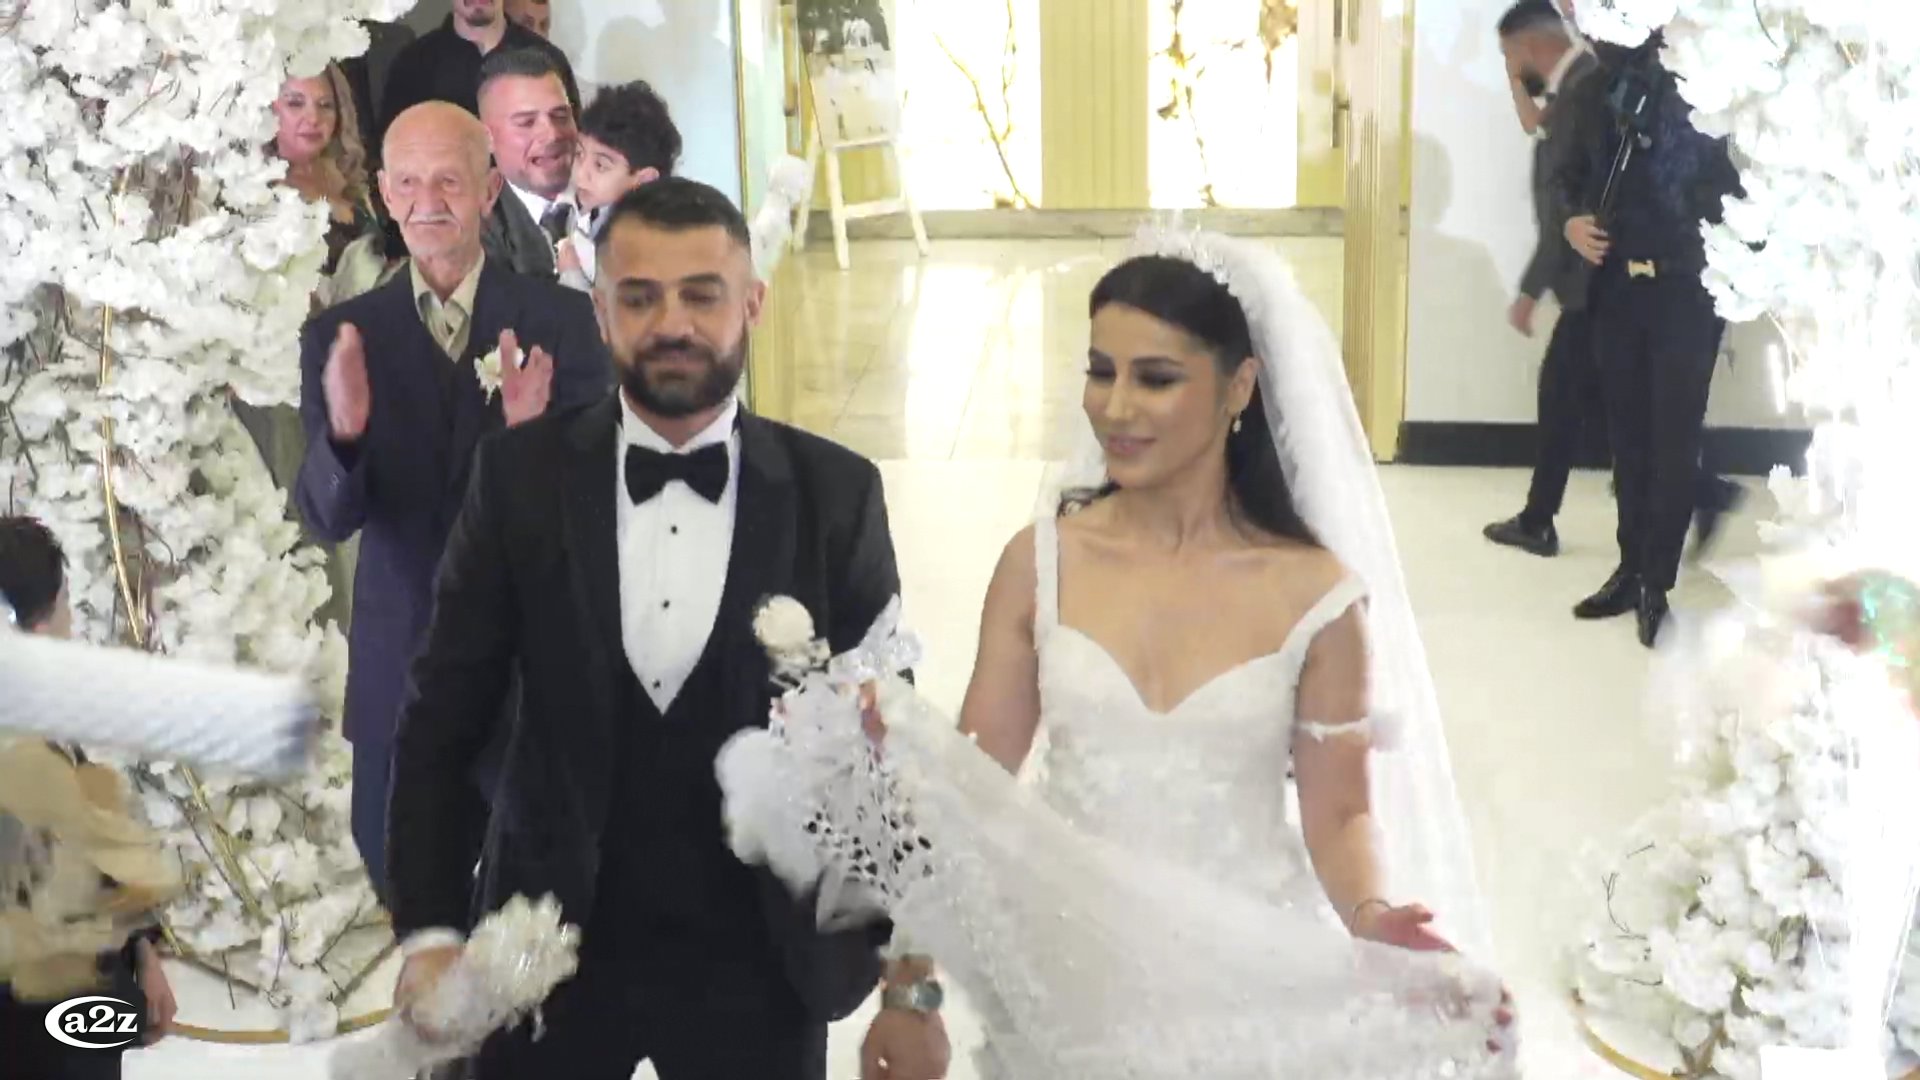 Wedding of Rimon and Dina on Livestream